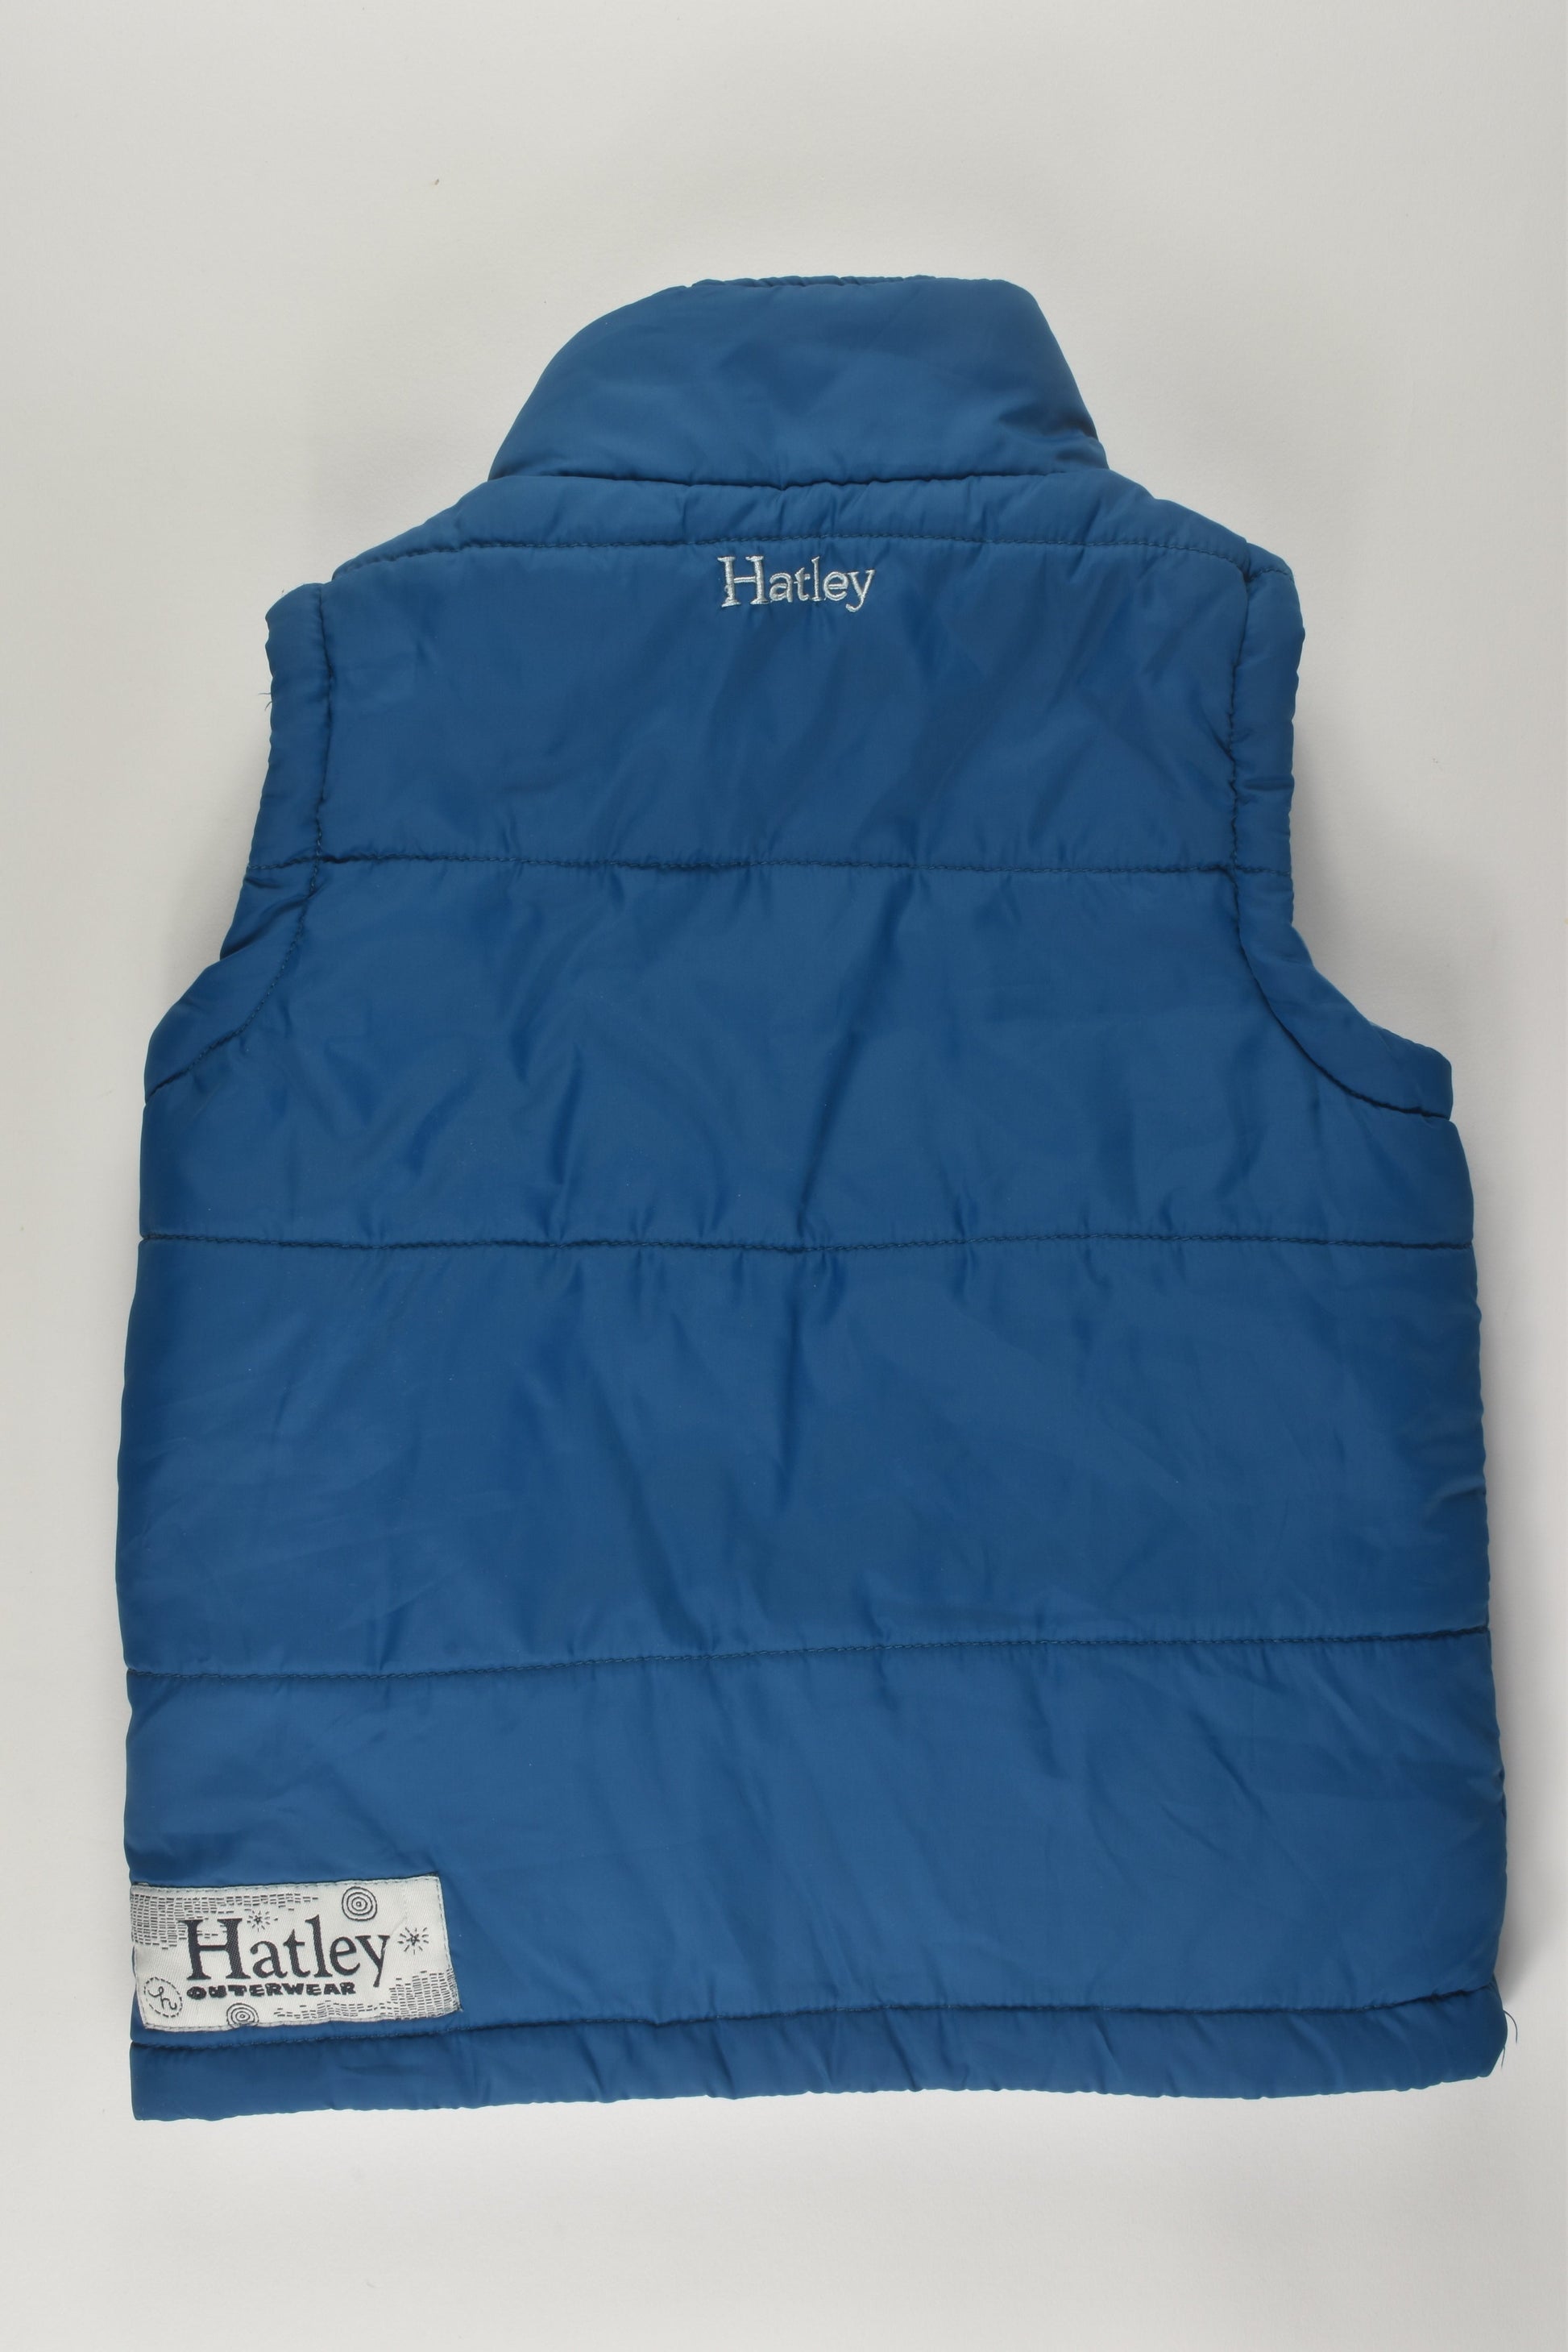 Hatley Size 3 Reversible Puffer Vest